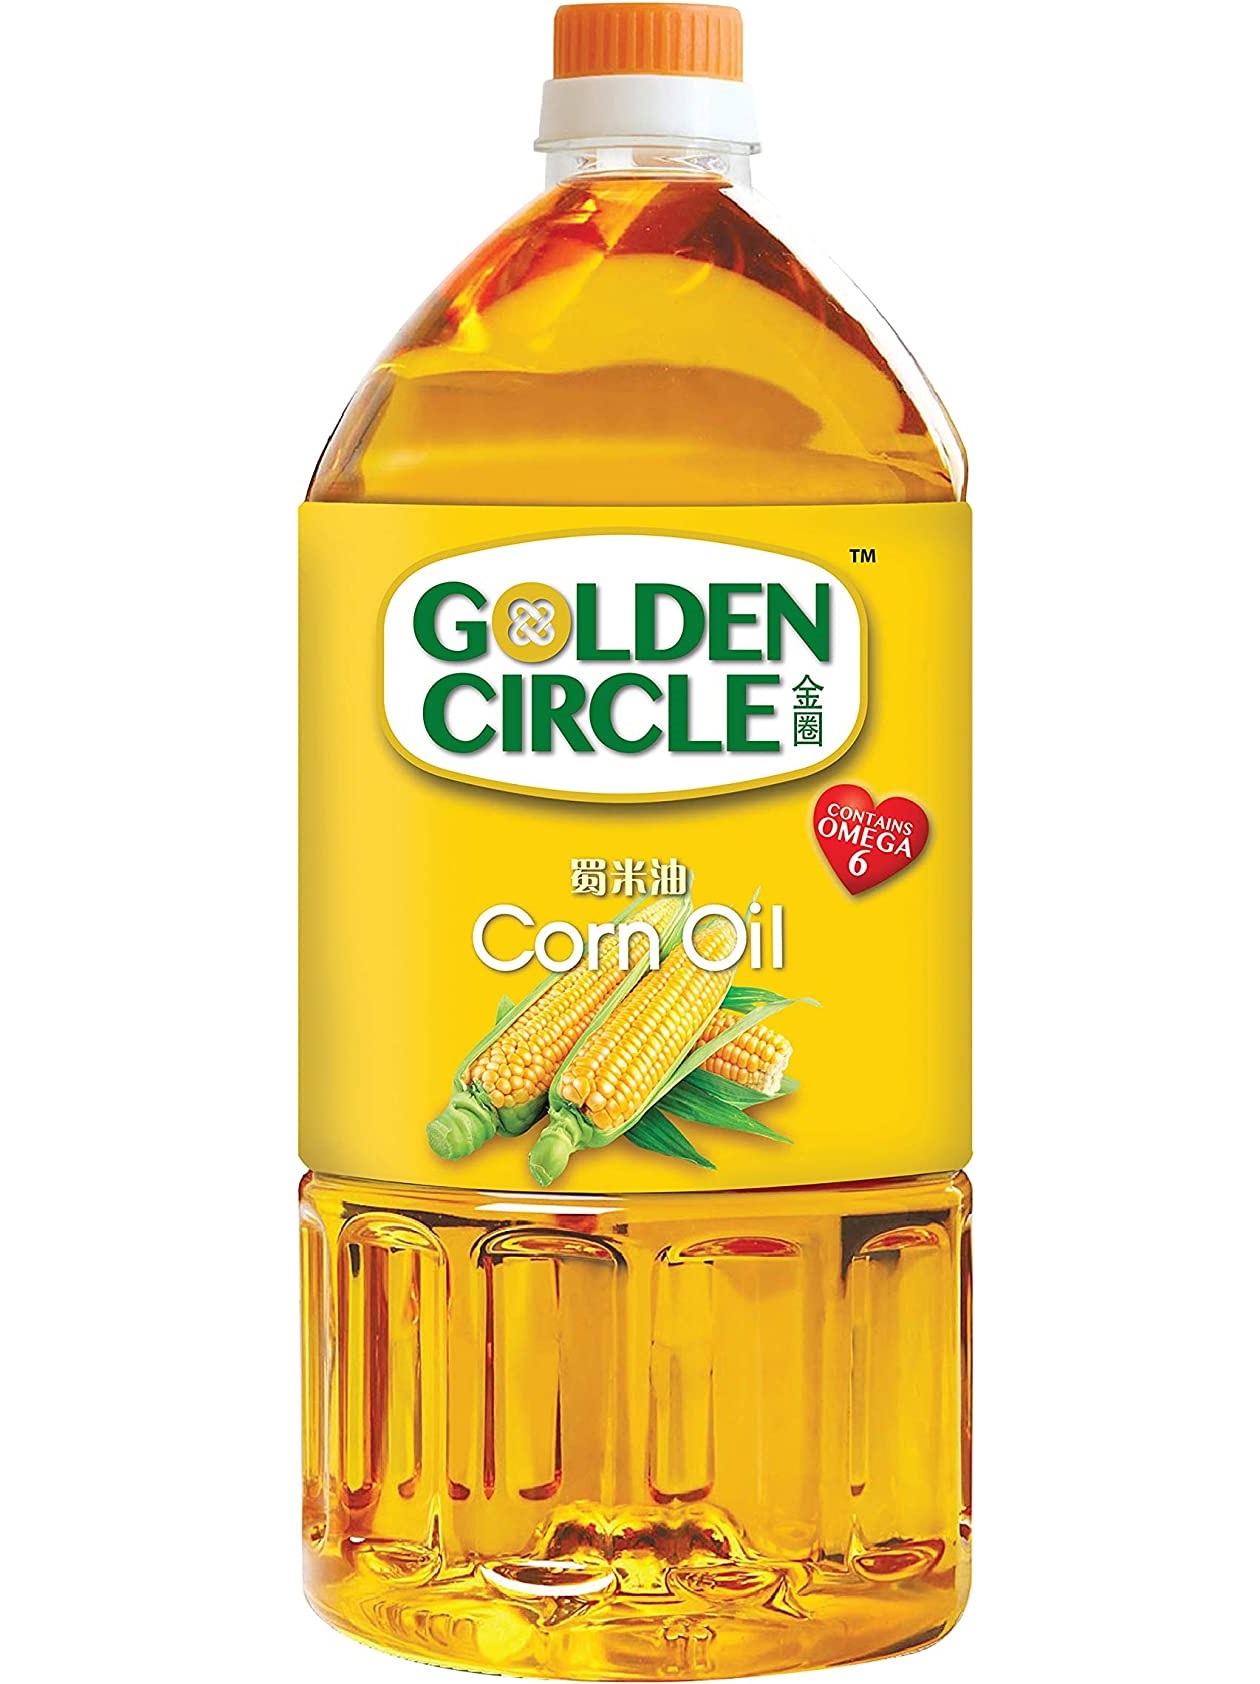 Golden Circle Corn Oil, 2L | Lazada Singapore